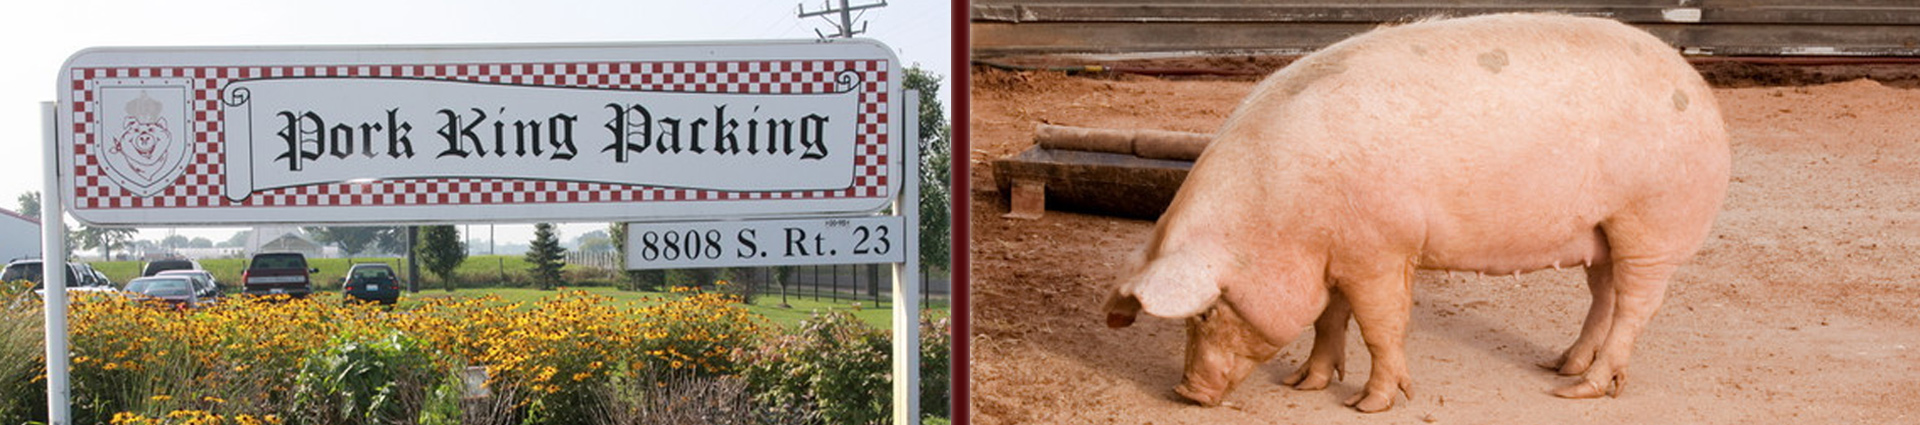 Pork King Packing – Since 1988